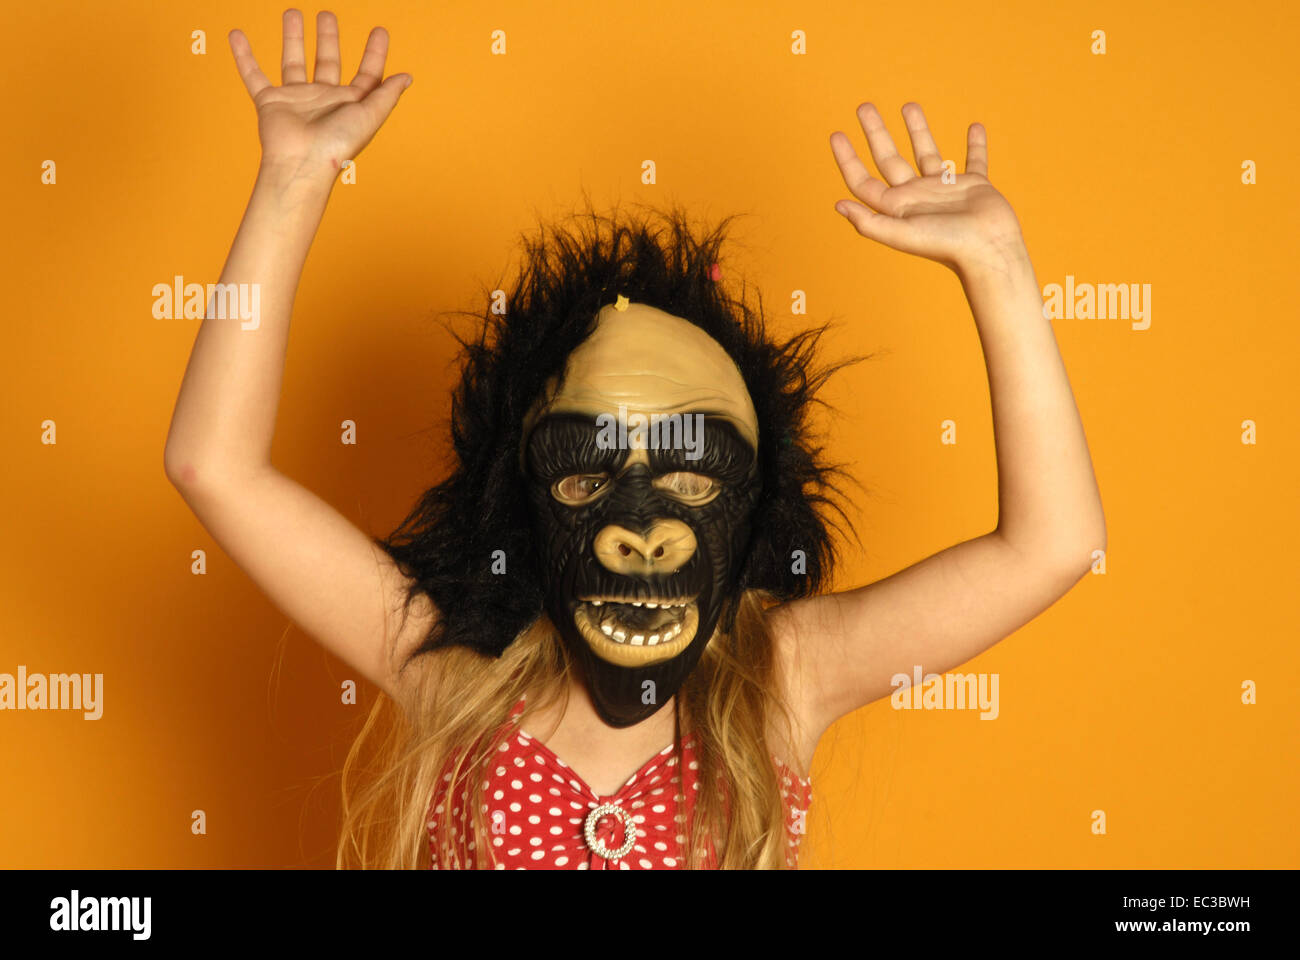 Girl wearing monkey mask Stock Photo